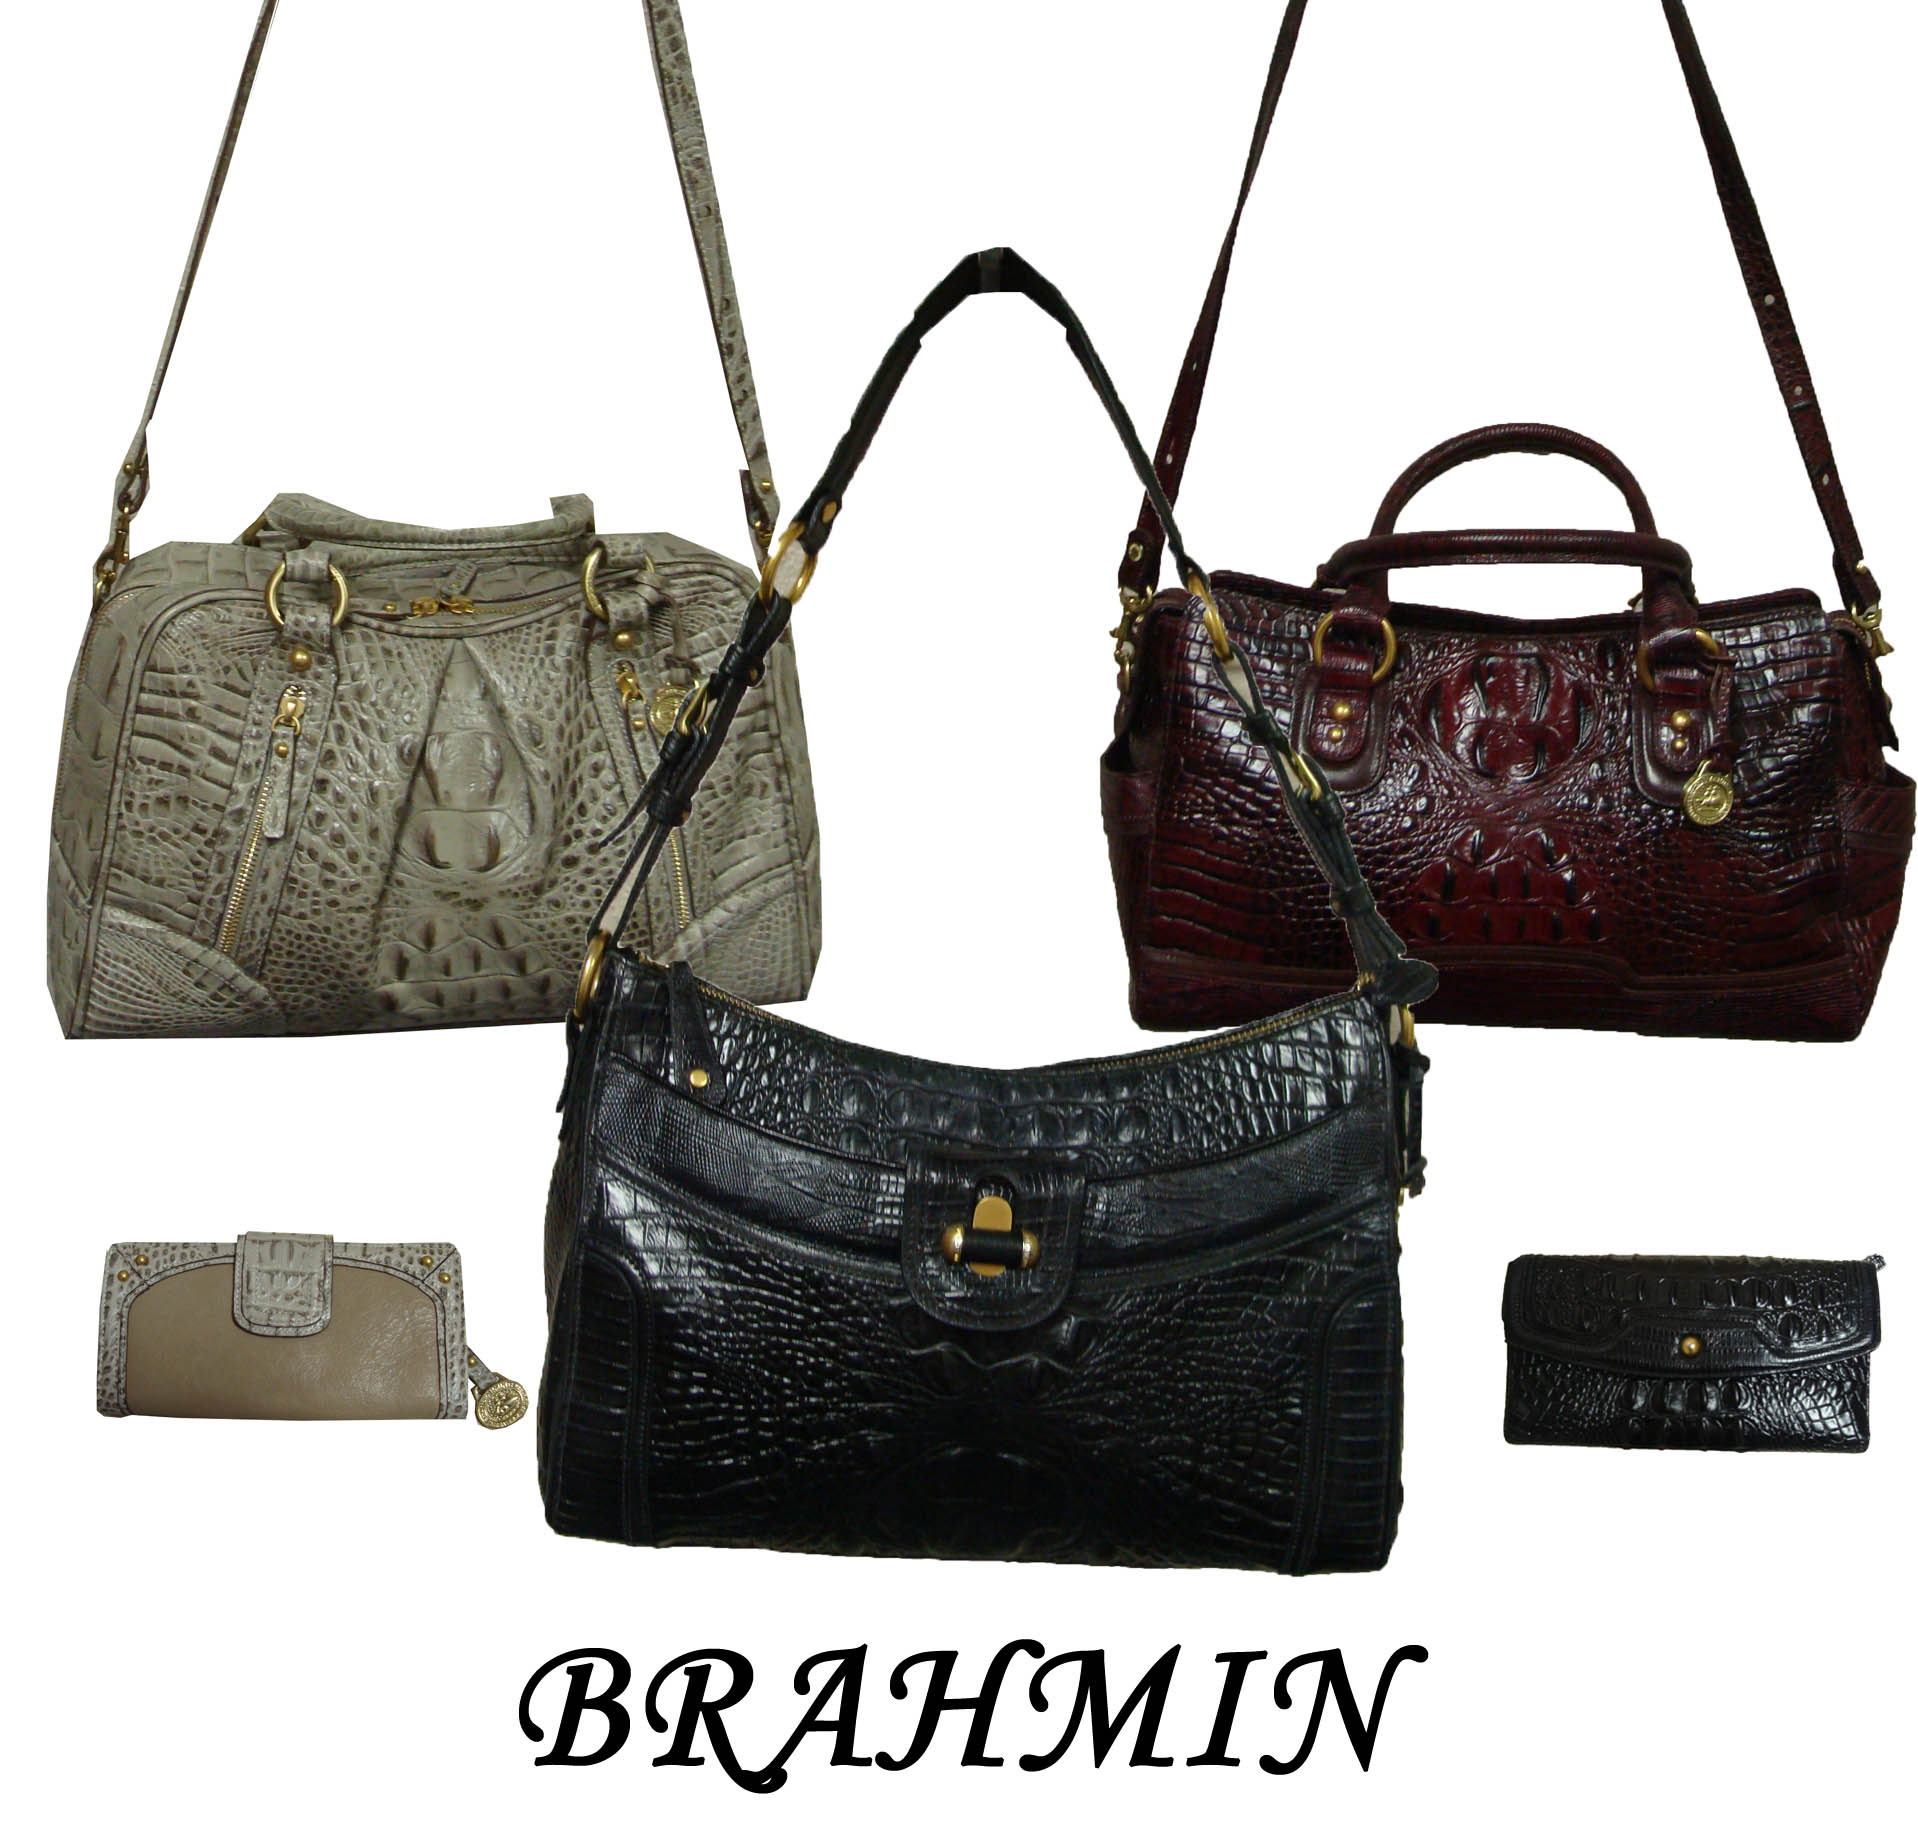 brahmin purse logo